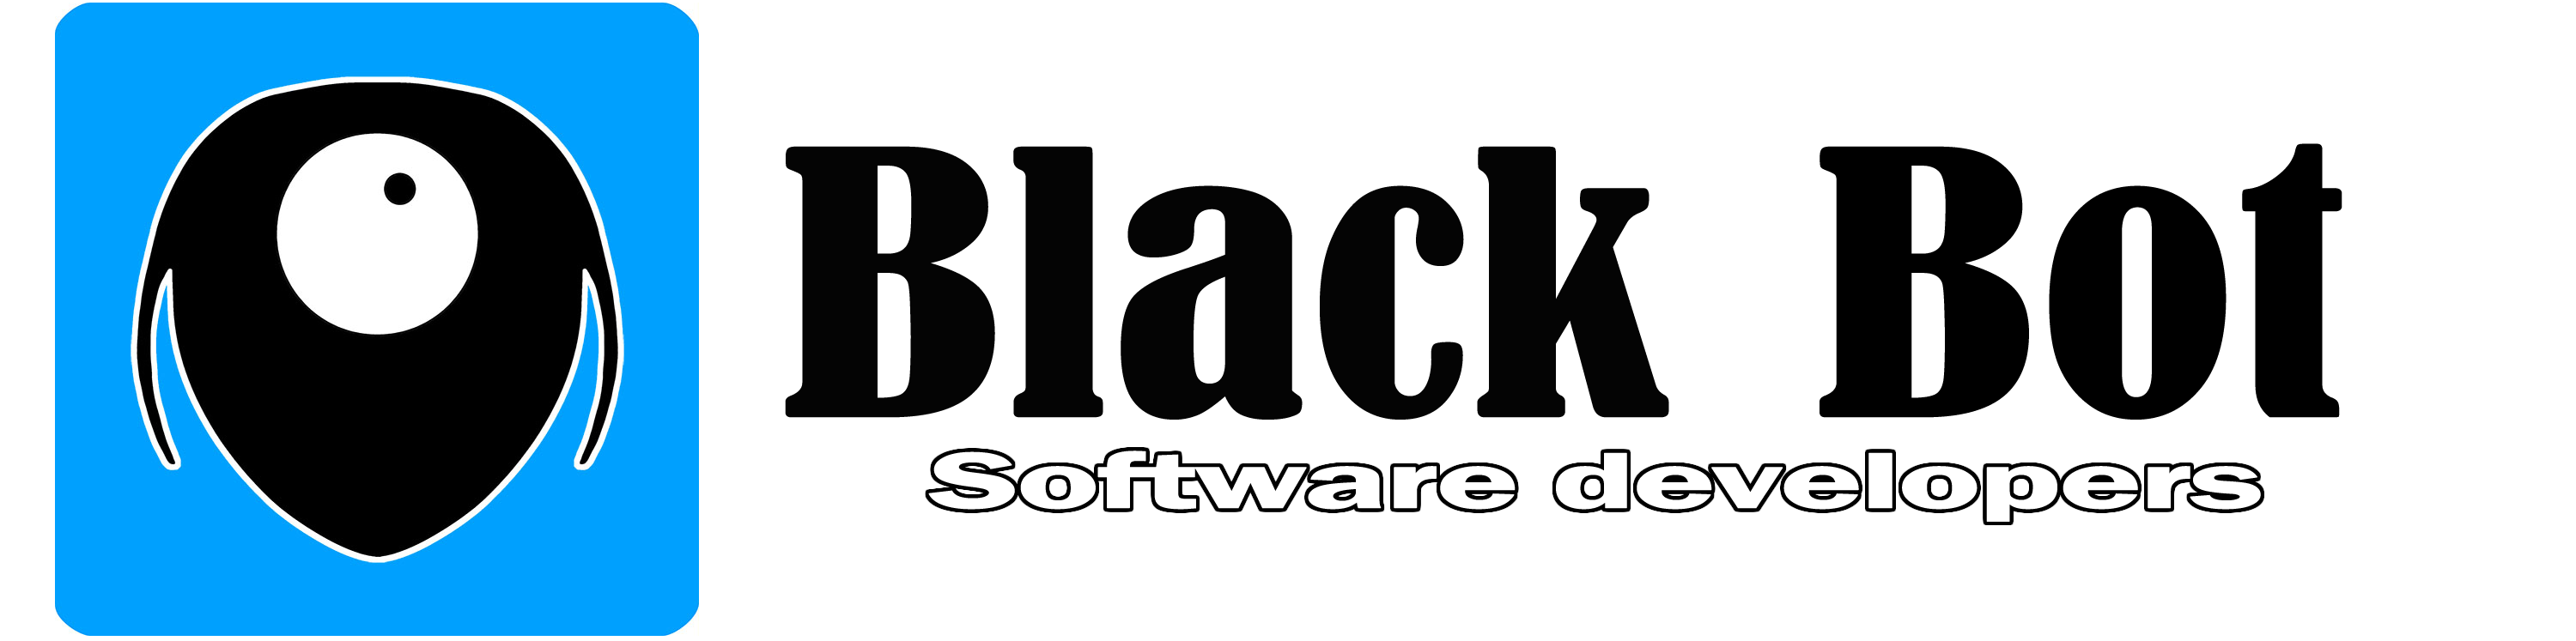 Blackbot software developers logo